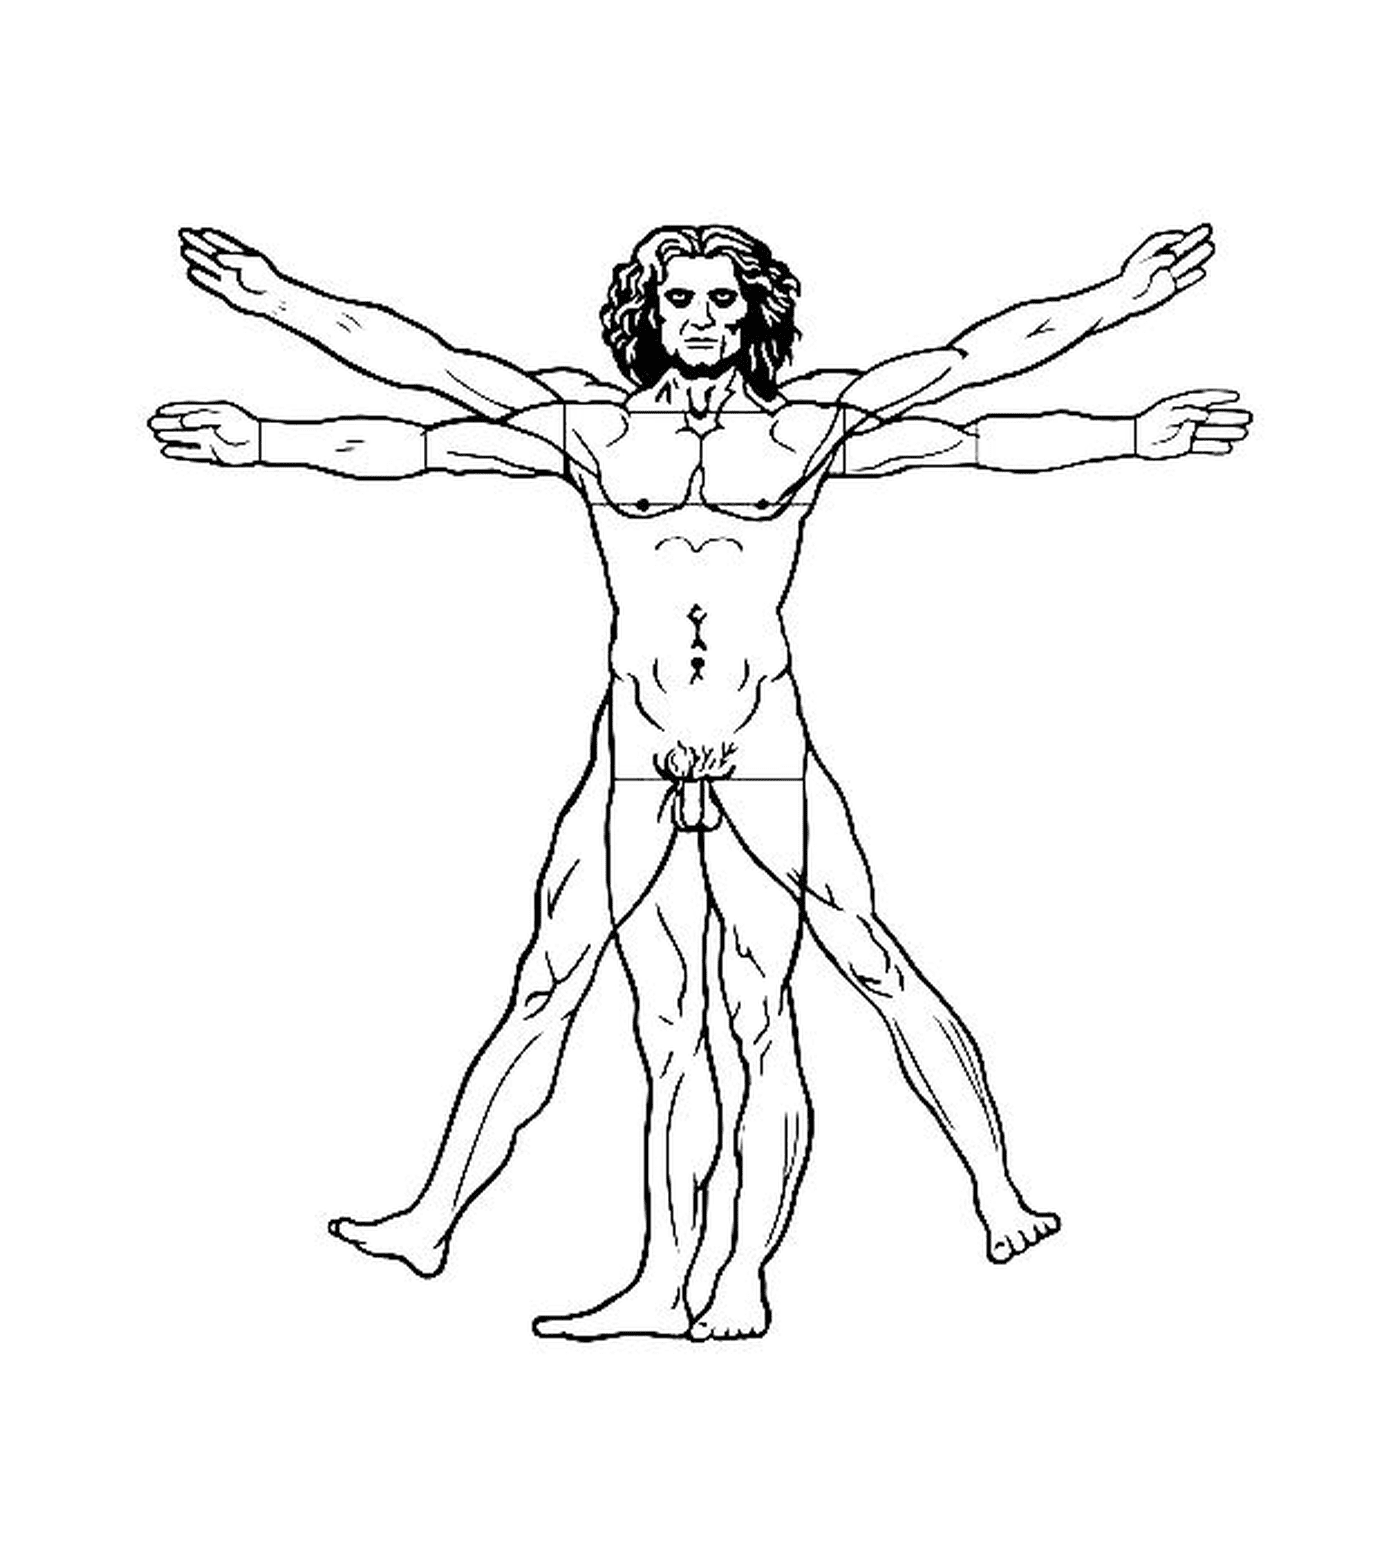  a man with arms stretched out according to Leonardo da Vinci's Vitruvian Man 